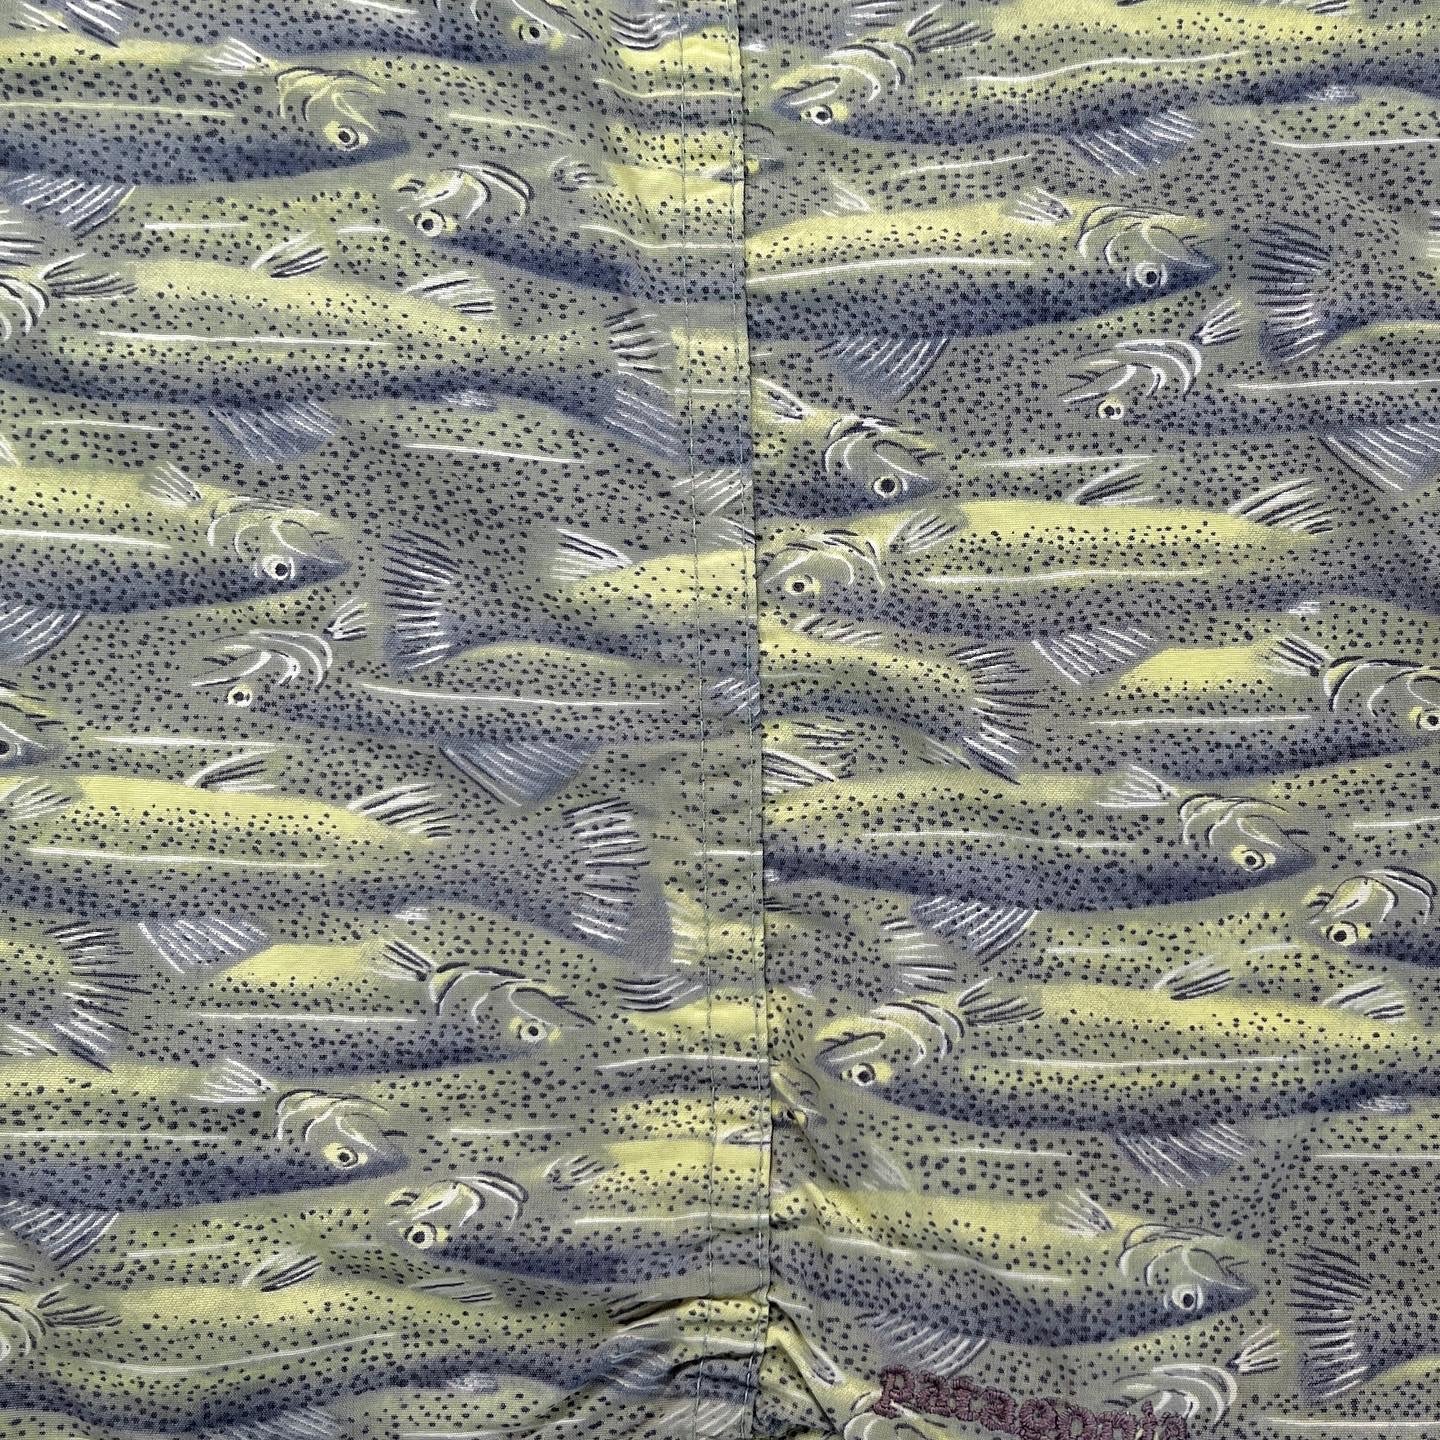 2002 Patagonia Mens 6” Printed River Shorts, School of Trout (XL)